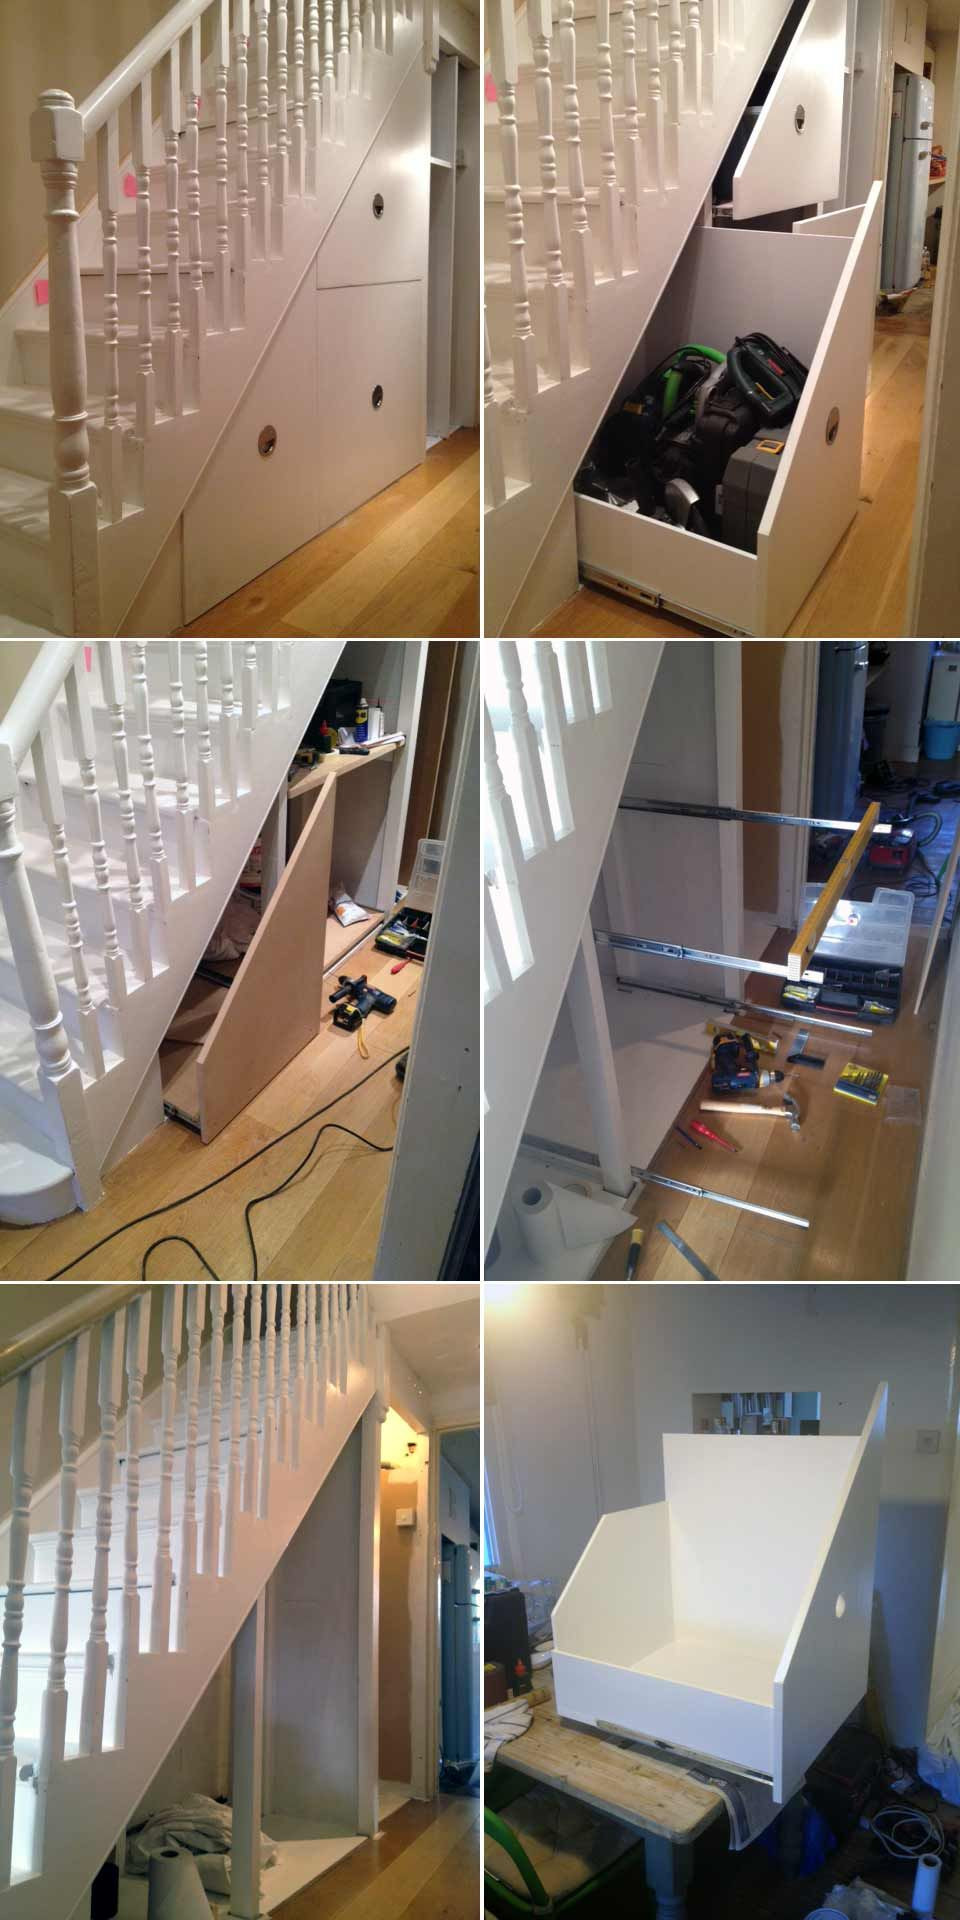 Best ideas about DIY Under Stairs Storage
. Save or Pin Under stairs storage DIY project in London Victorian house Now.